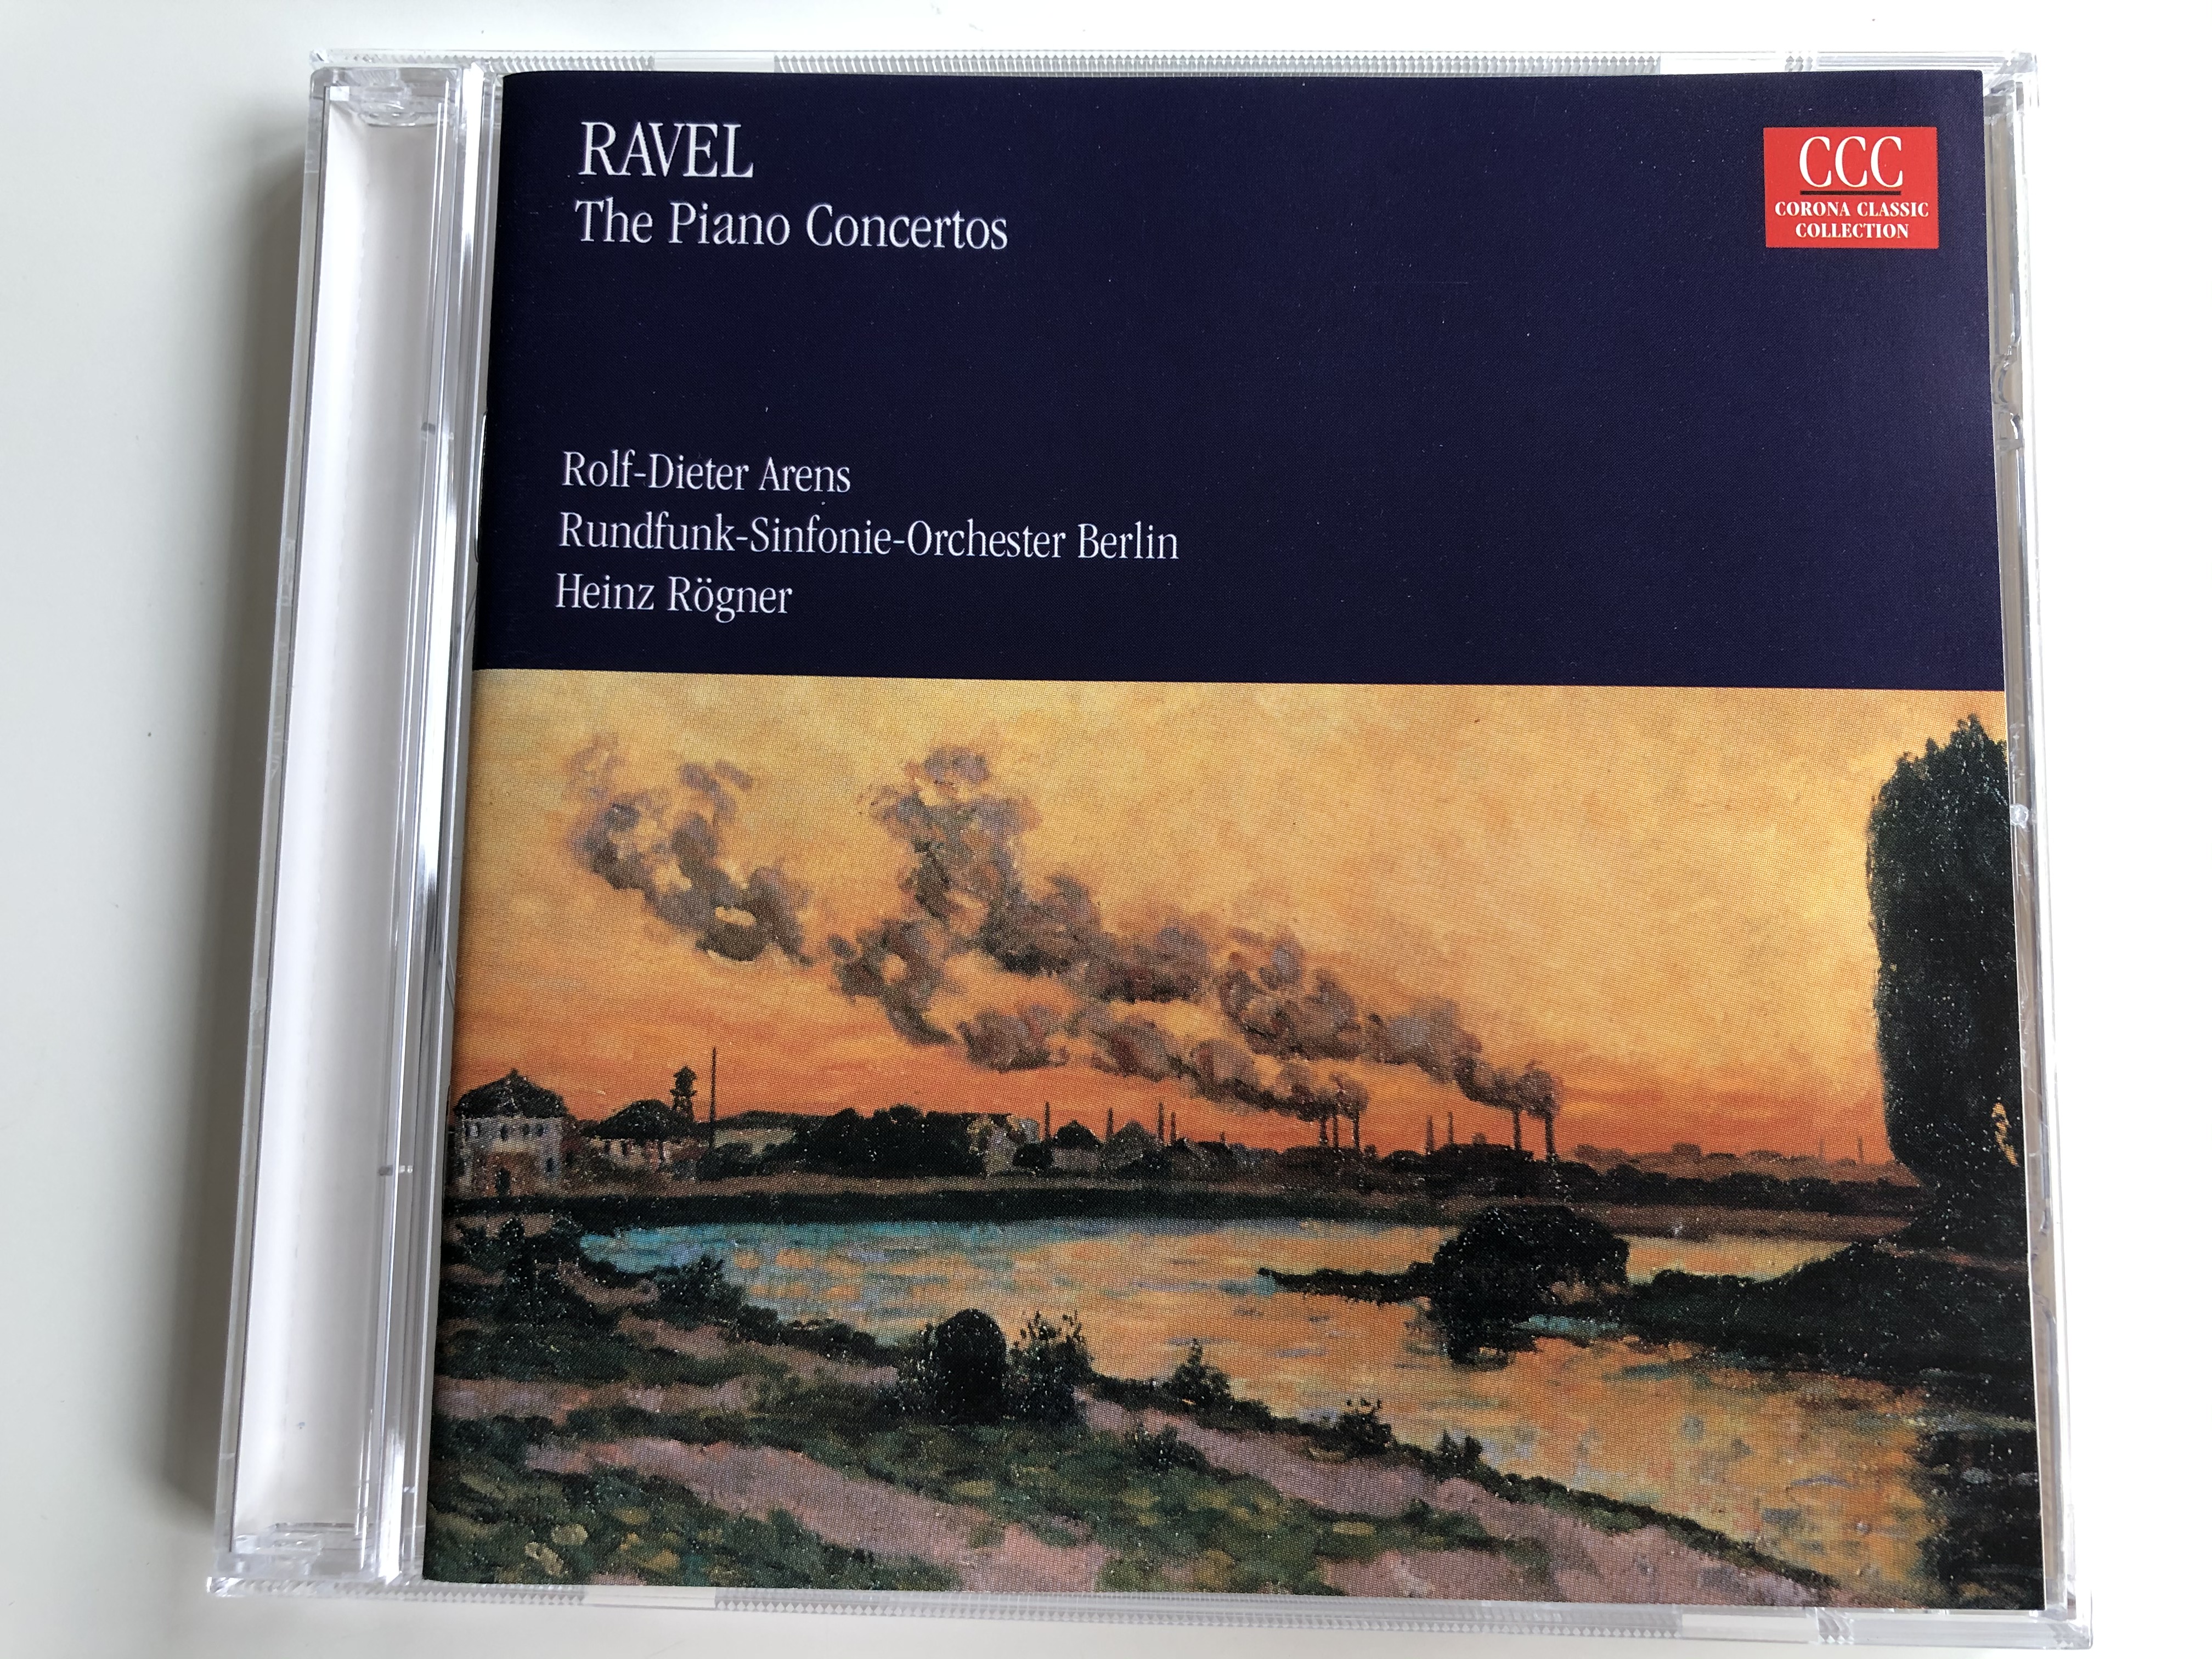 ravel-the-piano-concertos-rolf-dieter-arens-rundfunk-sinfonie-orchester-berlin-heinz-rogner-edel-audio-cd-1995-0000842ccc-1-.jpg